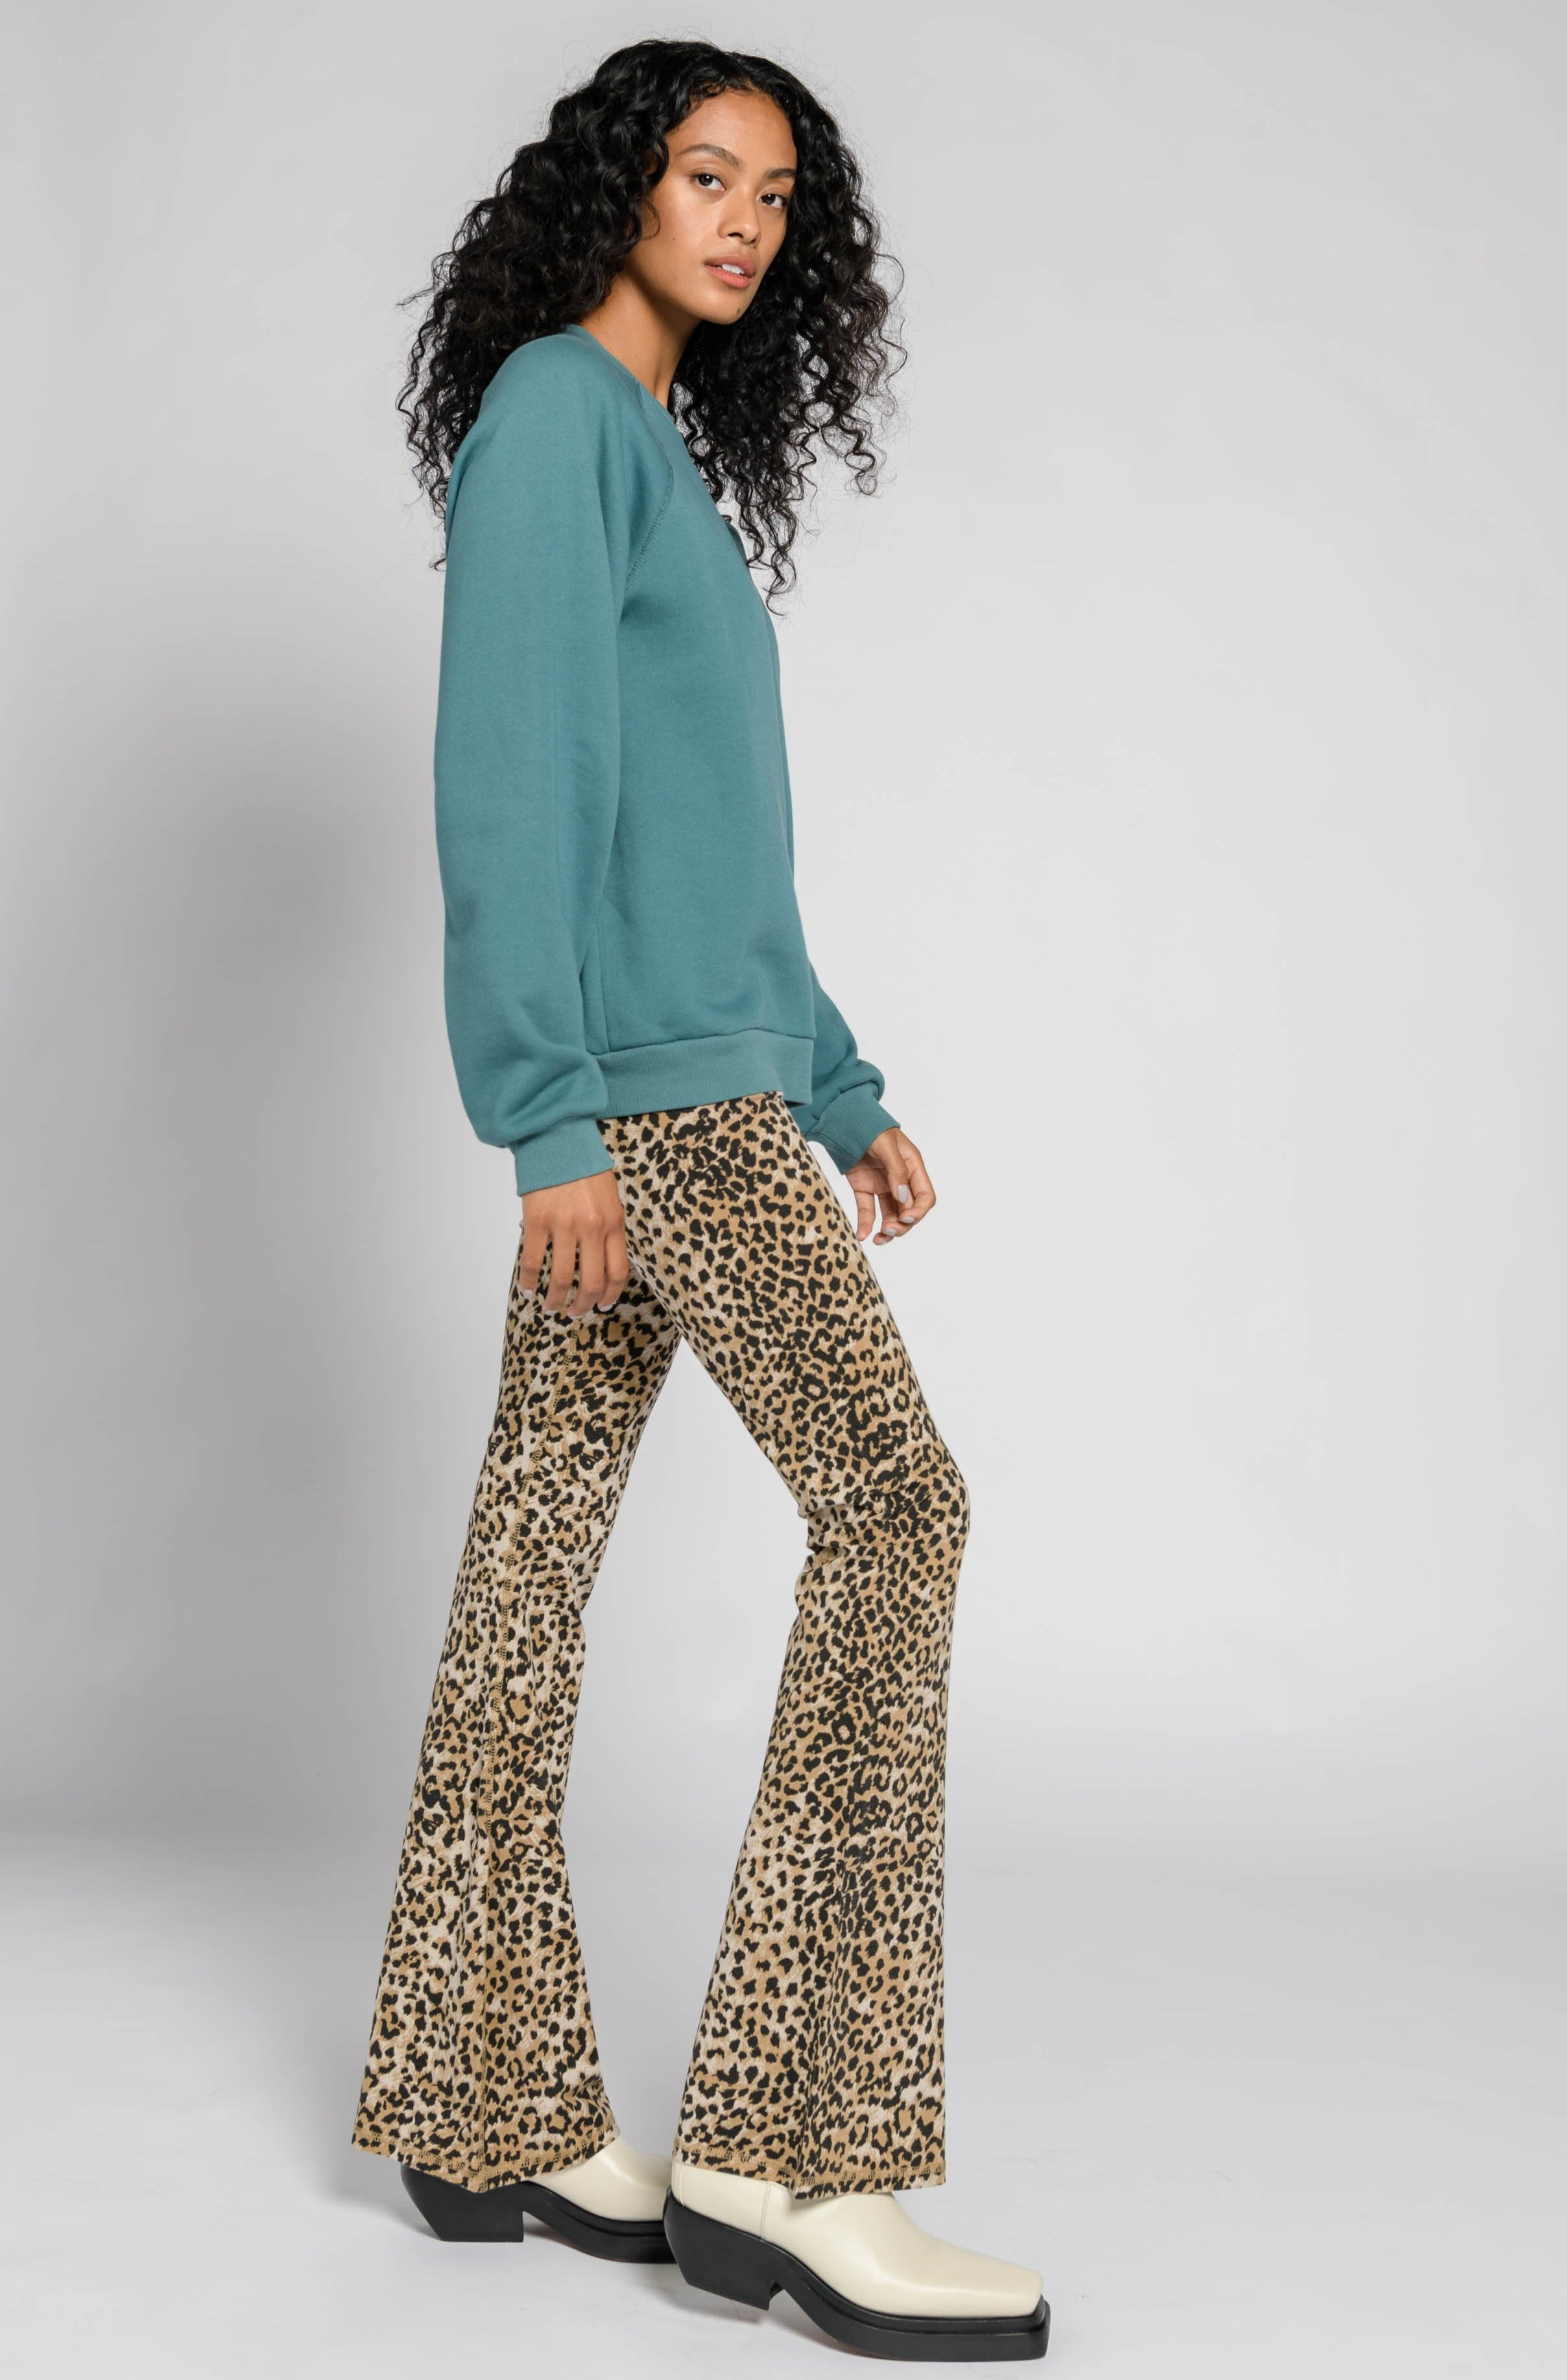 Leopard Print Leggings - Triflare